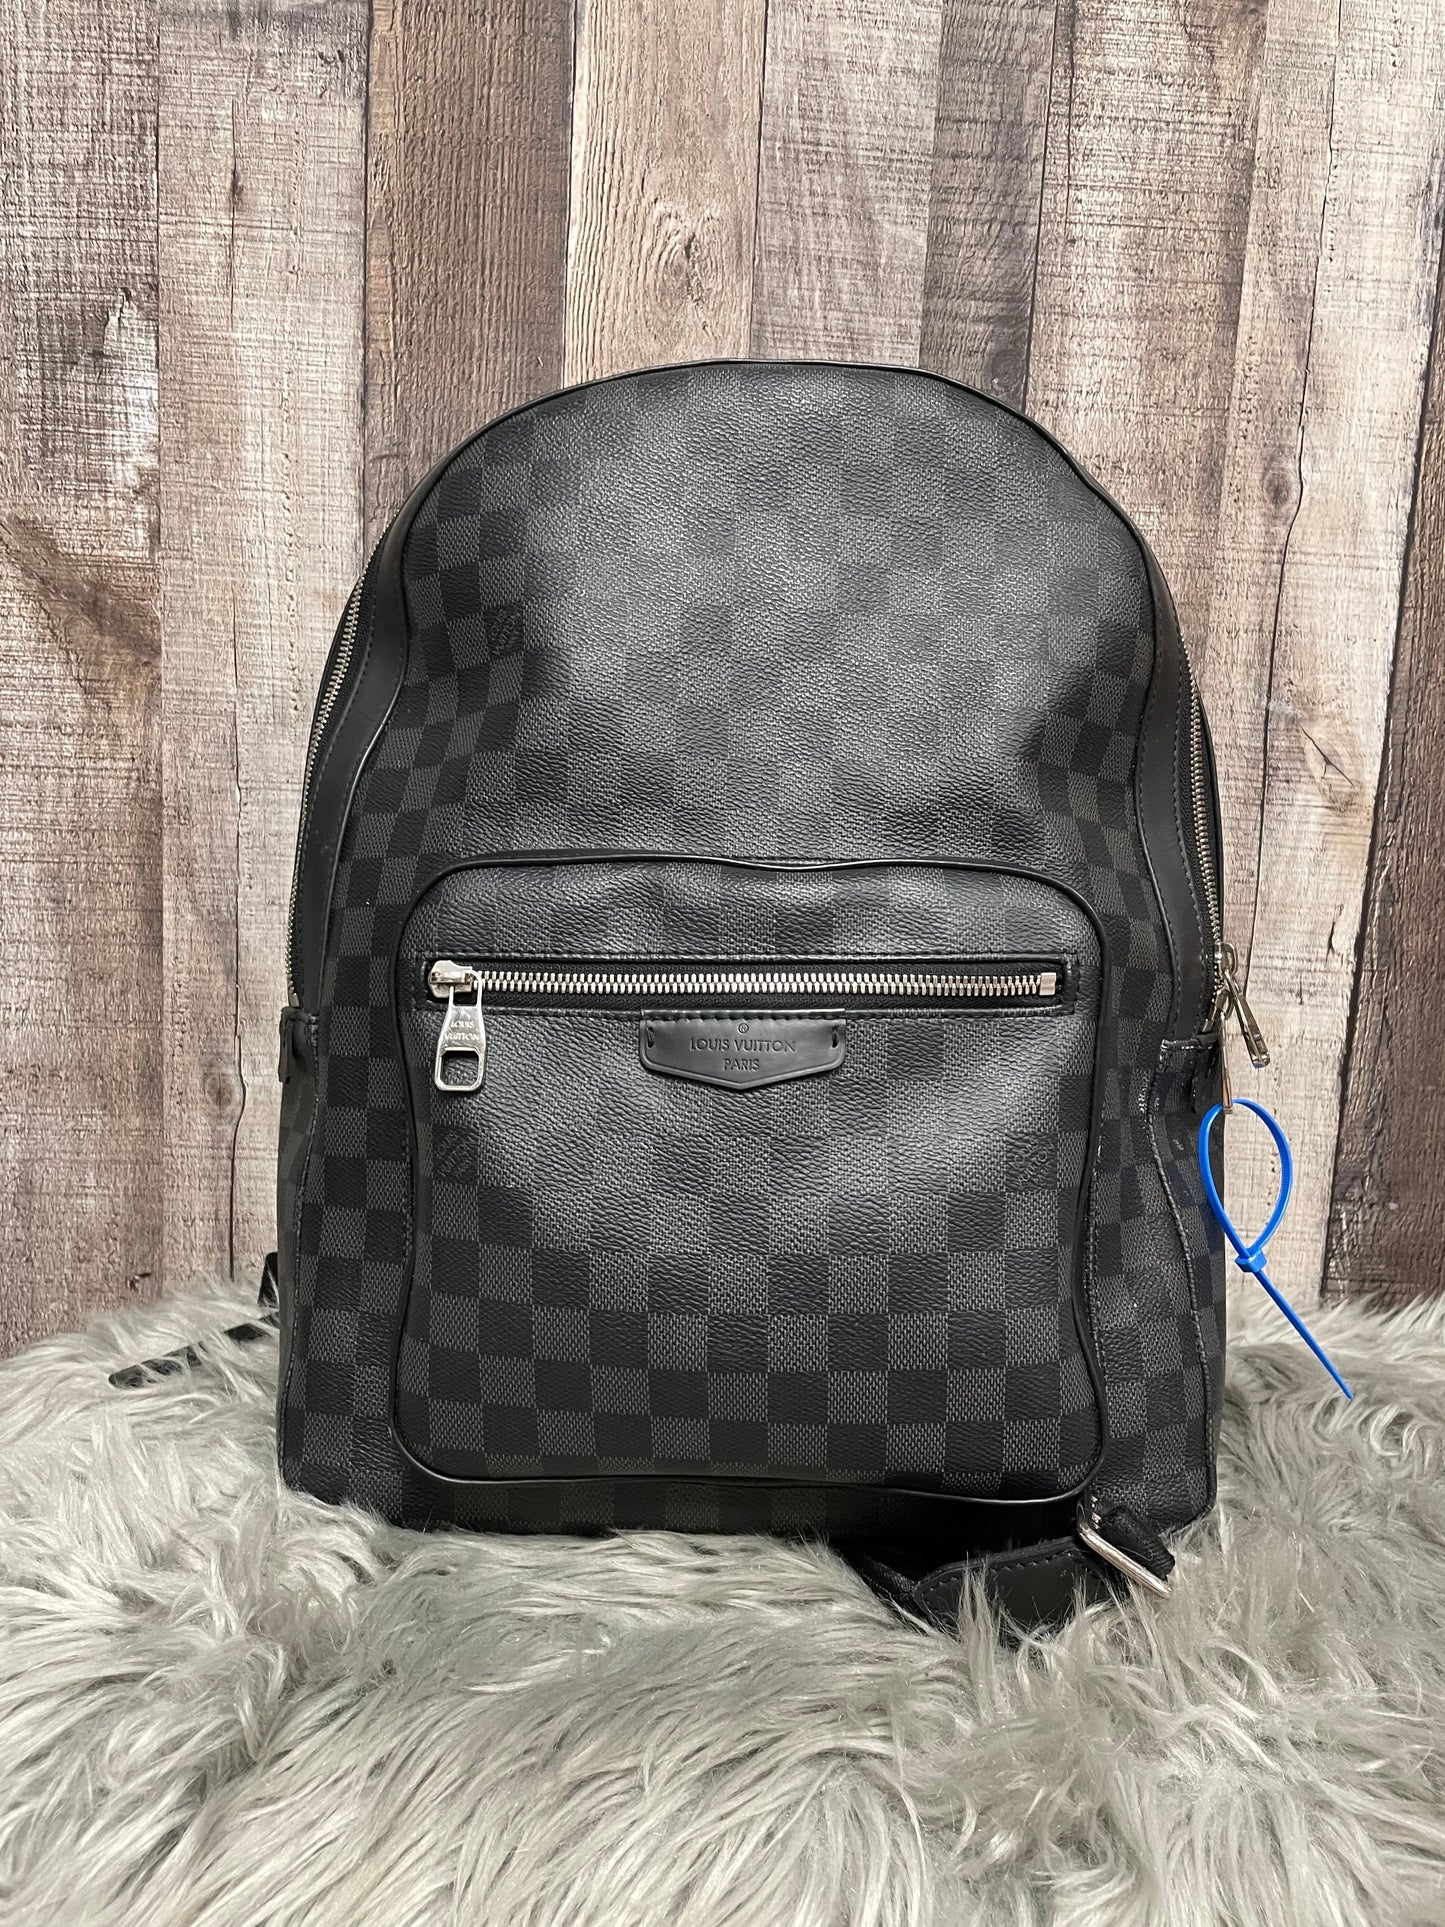 Backpack Luxury Designer Louis Vuitton, Size Large